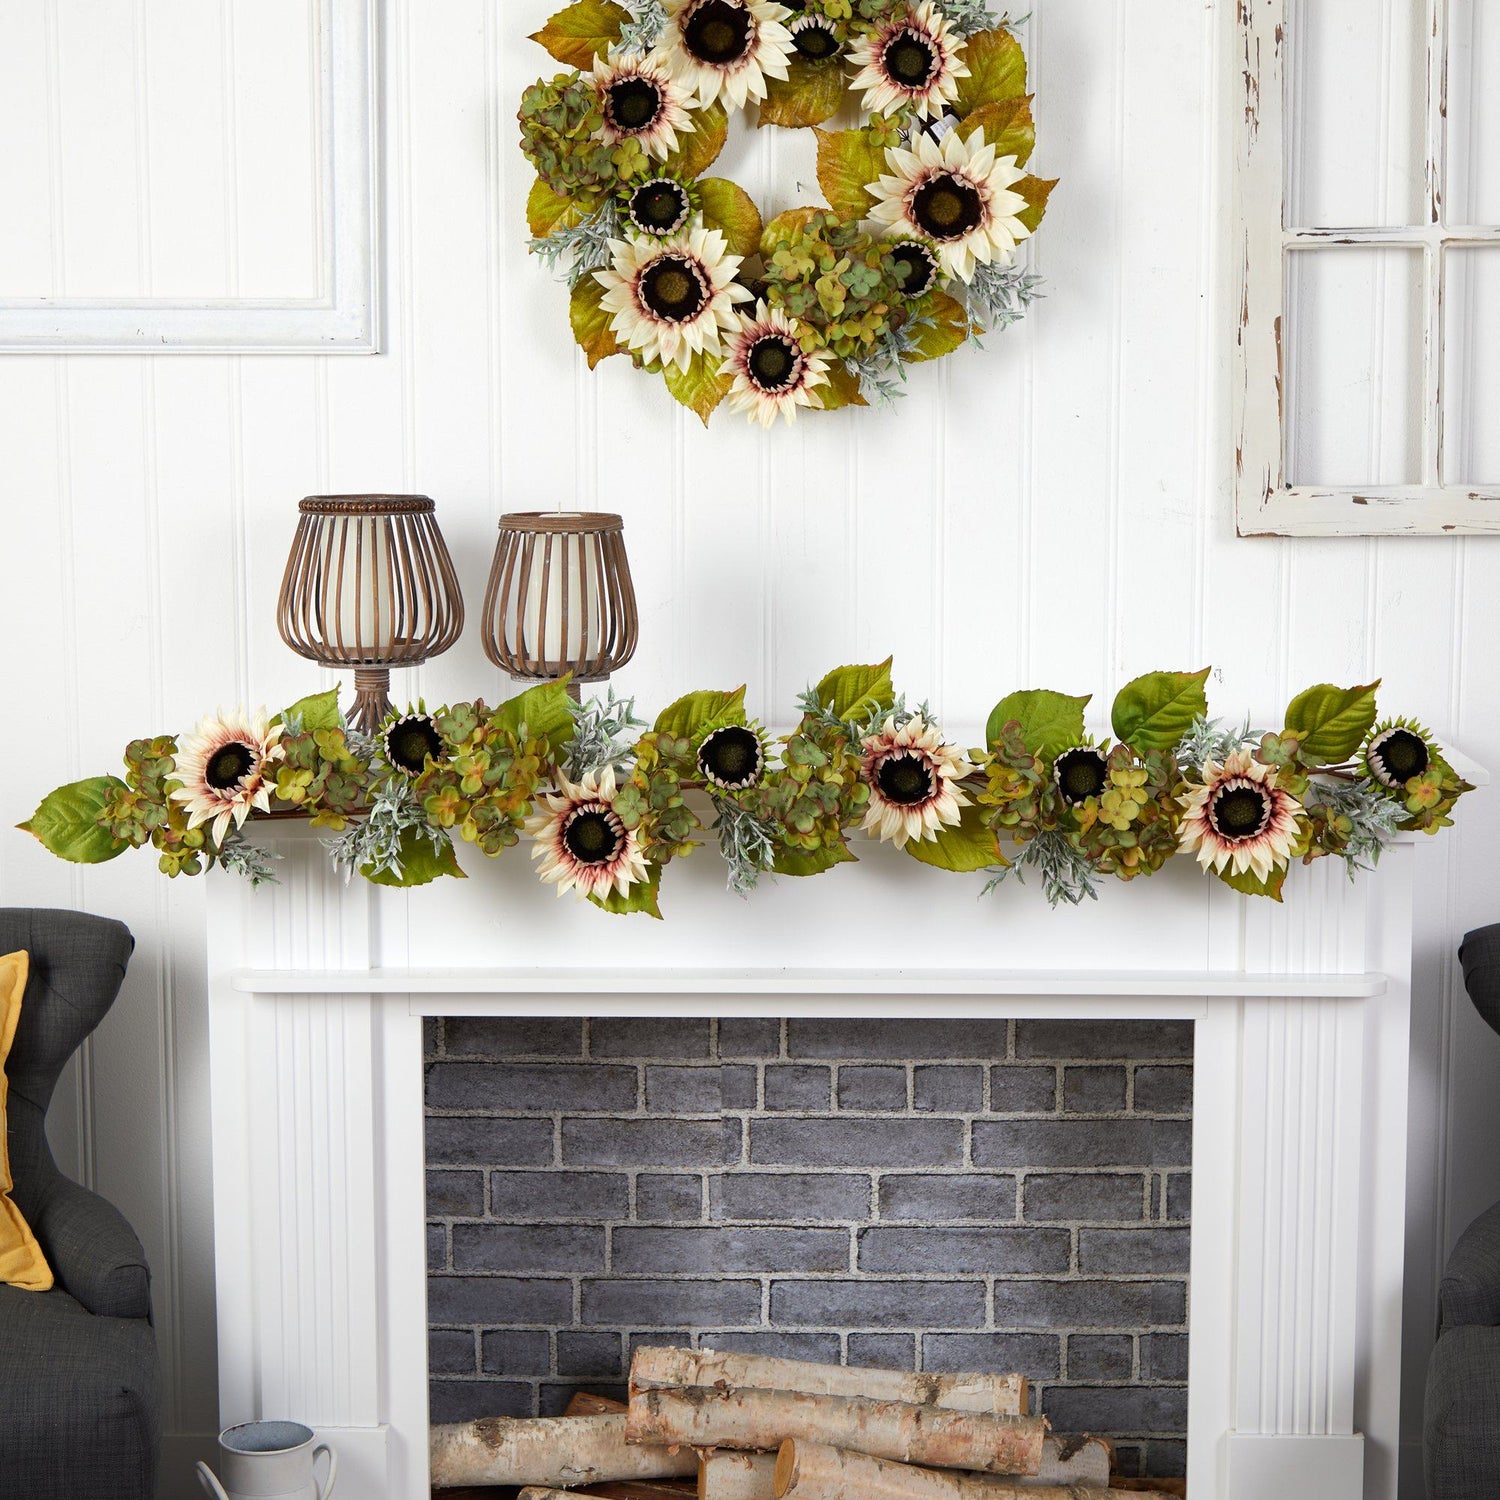 5’ White Sunflower and Hydrangea Artificial Garland